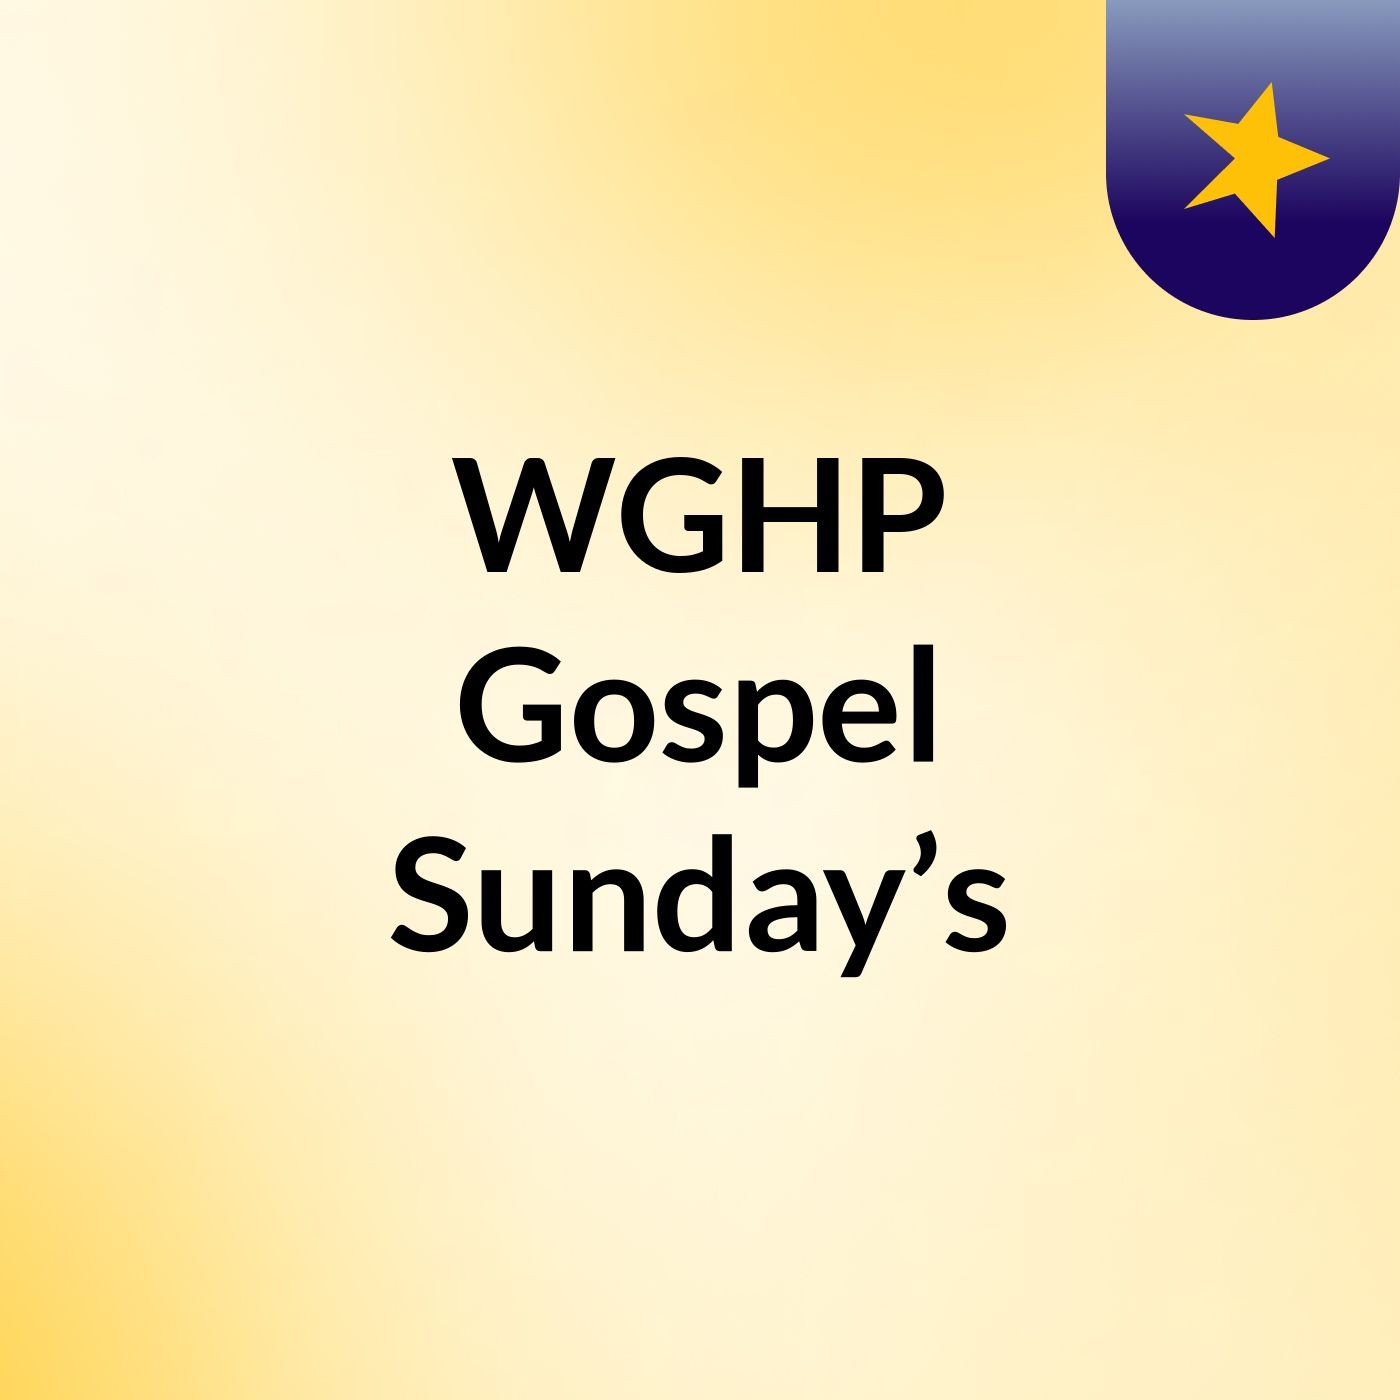 WGHP Gospel Sunday’s